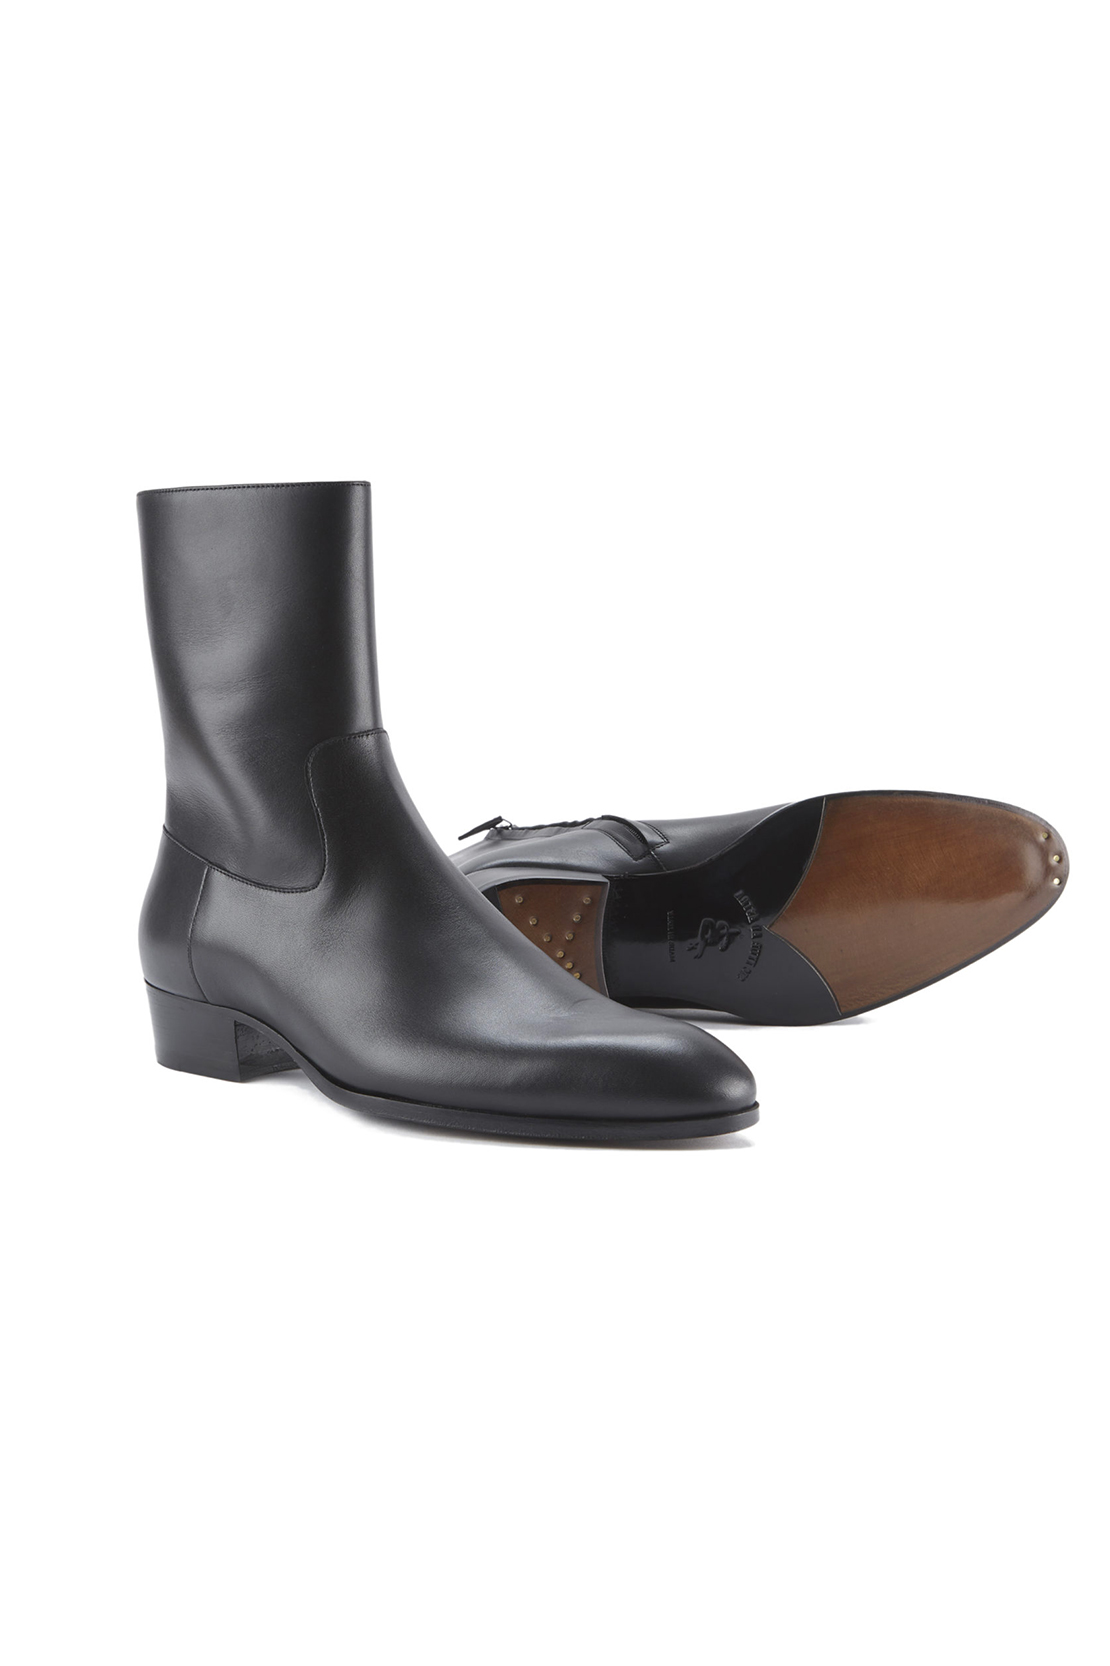 champion Senate National Cash Black Calf Leather Boots - Barbanera